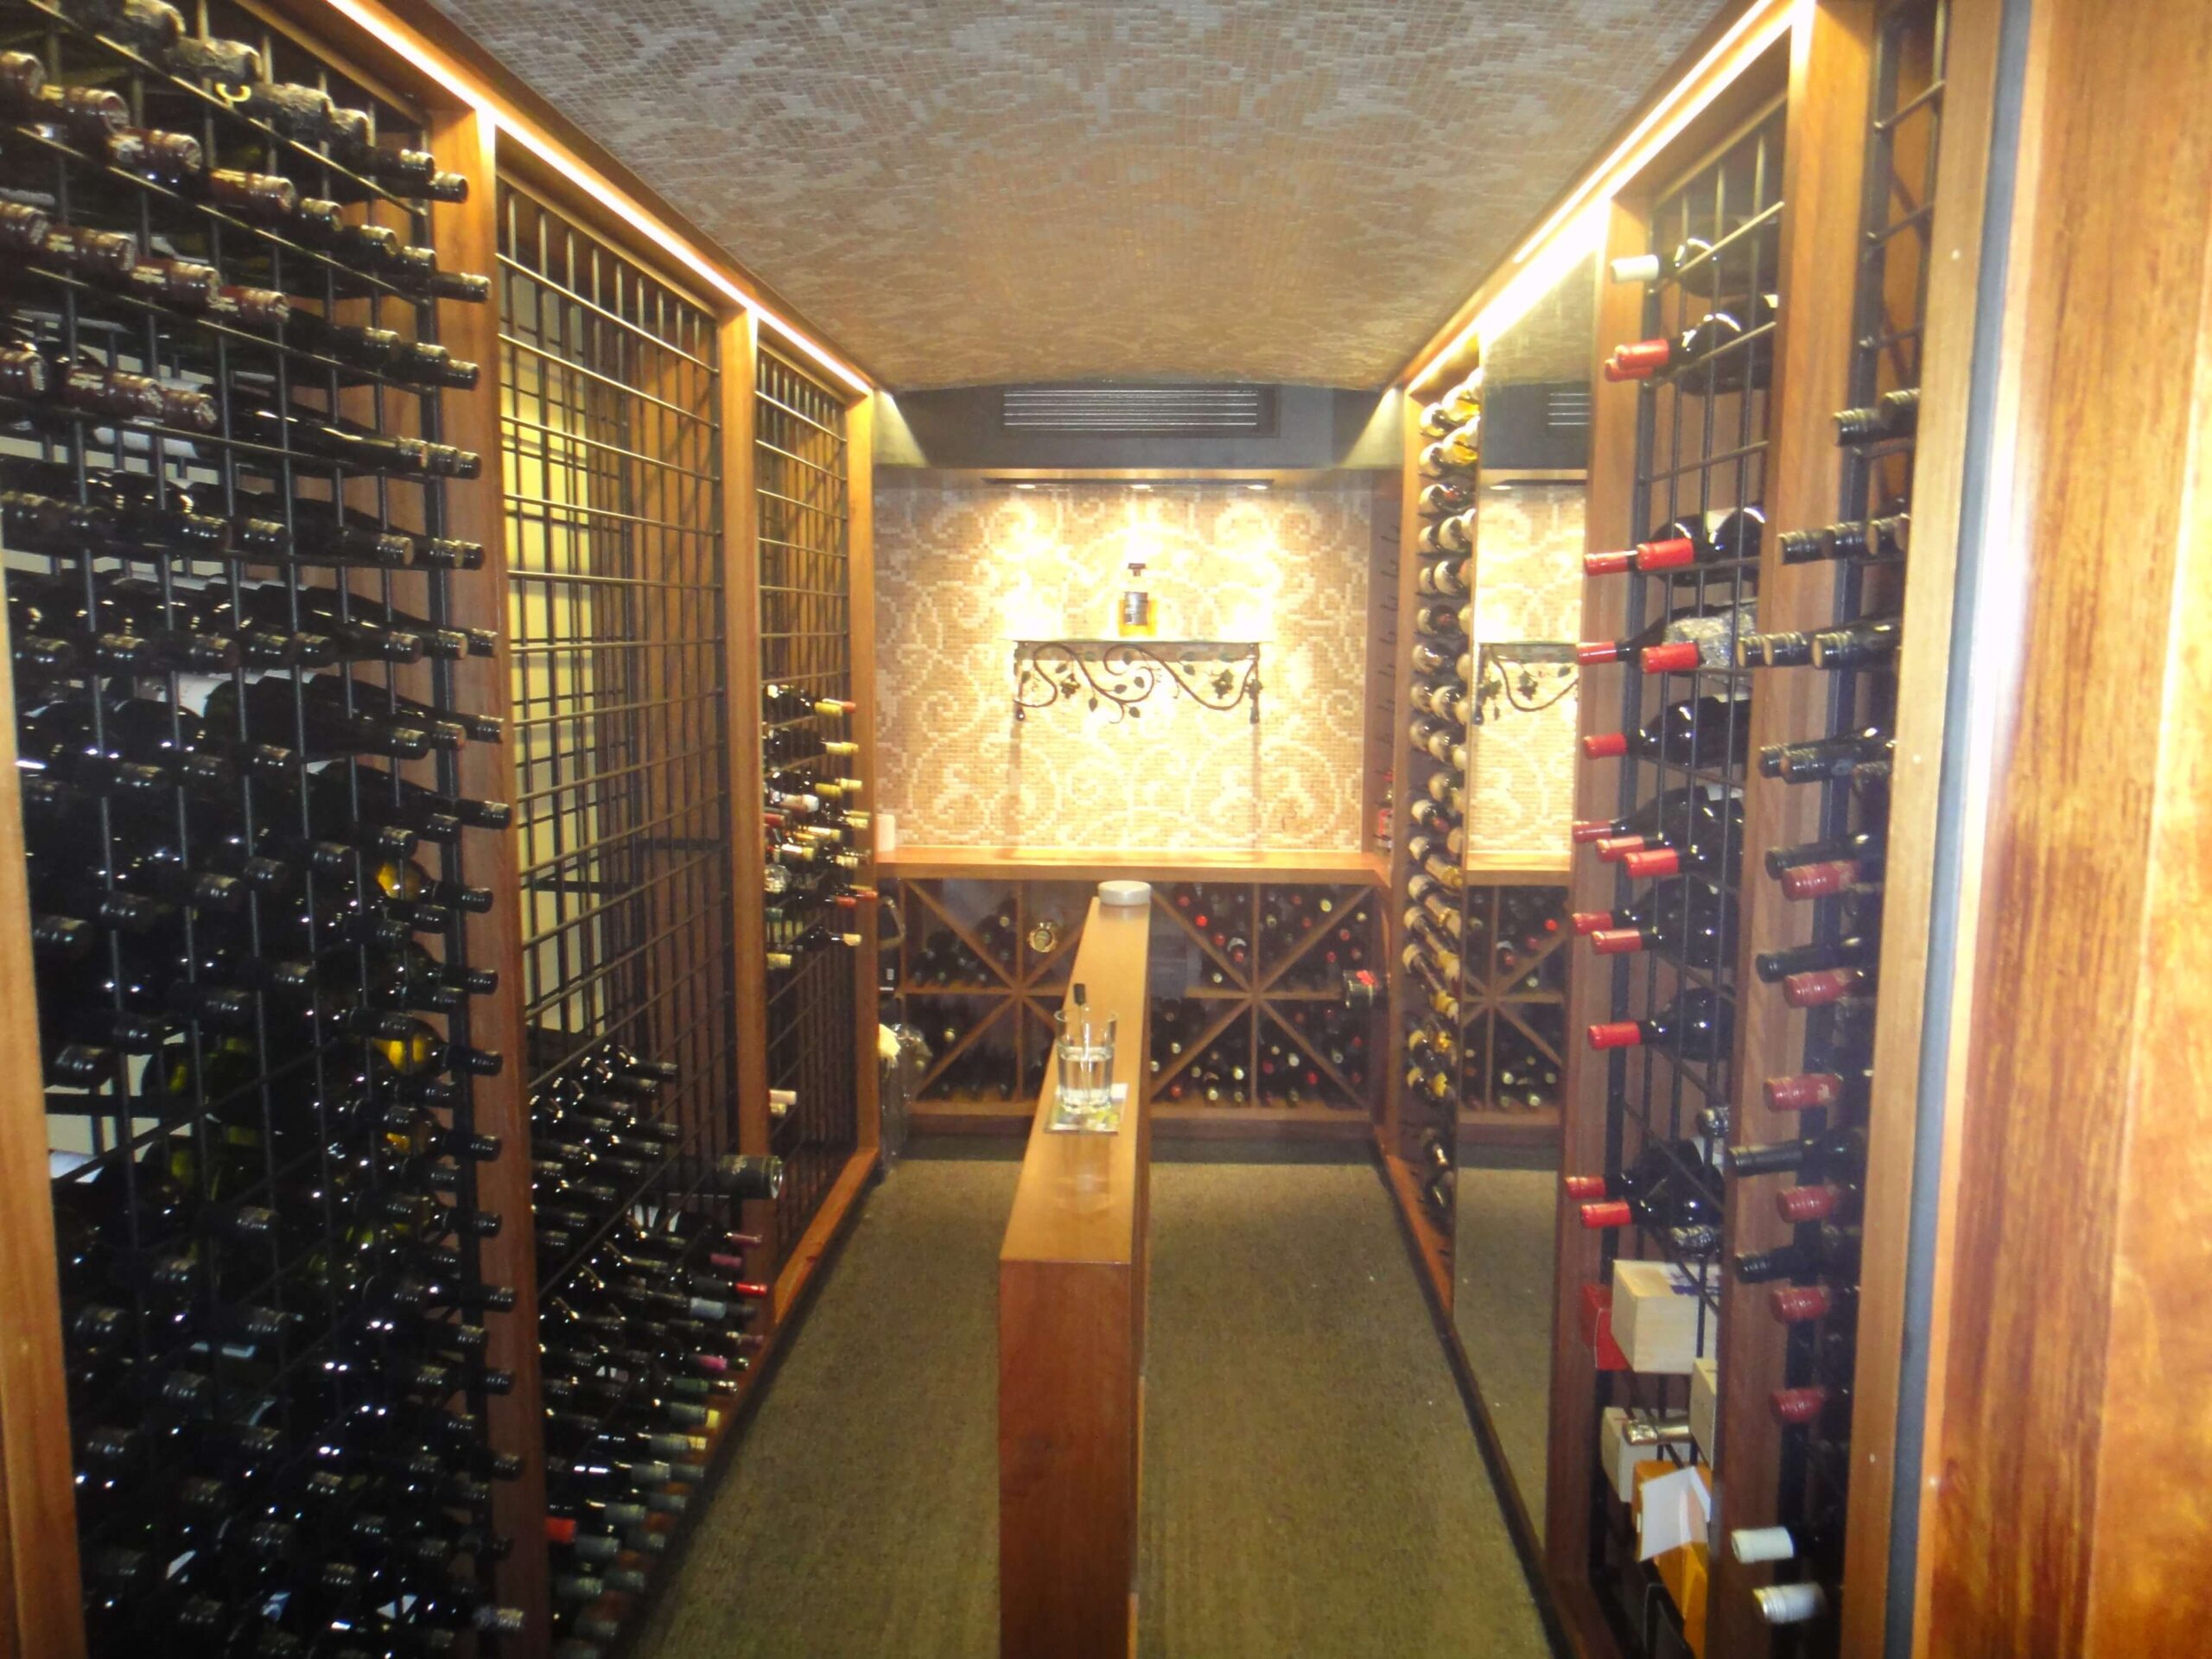 Wine Cellars